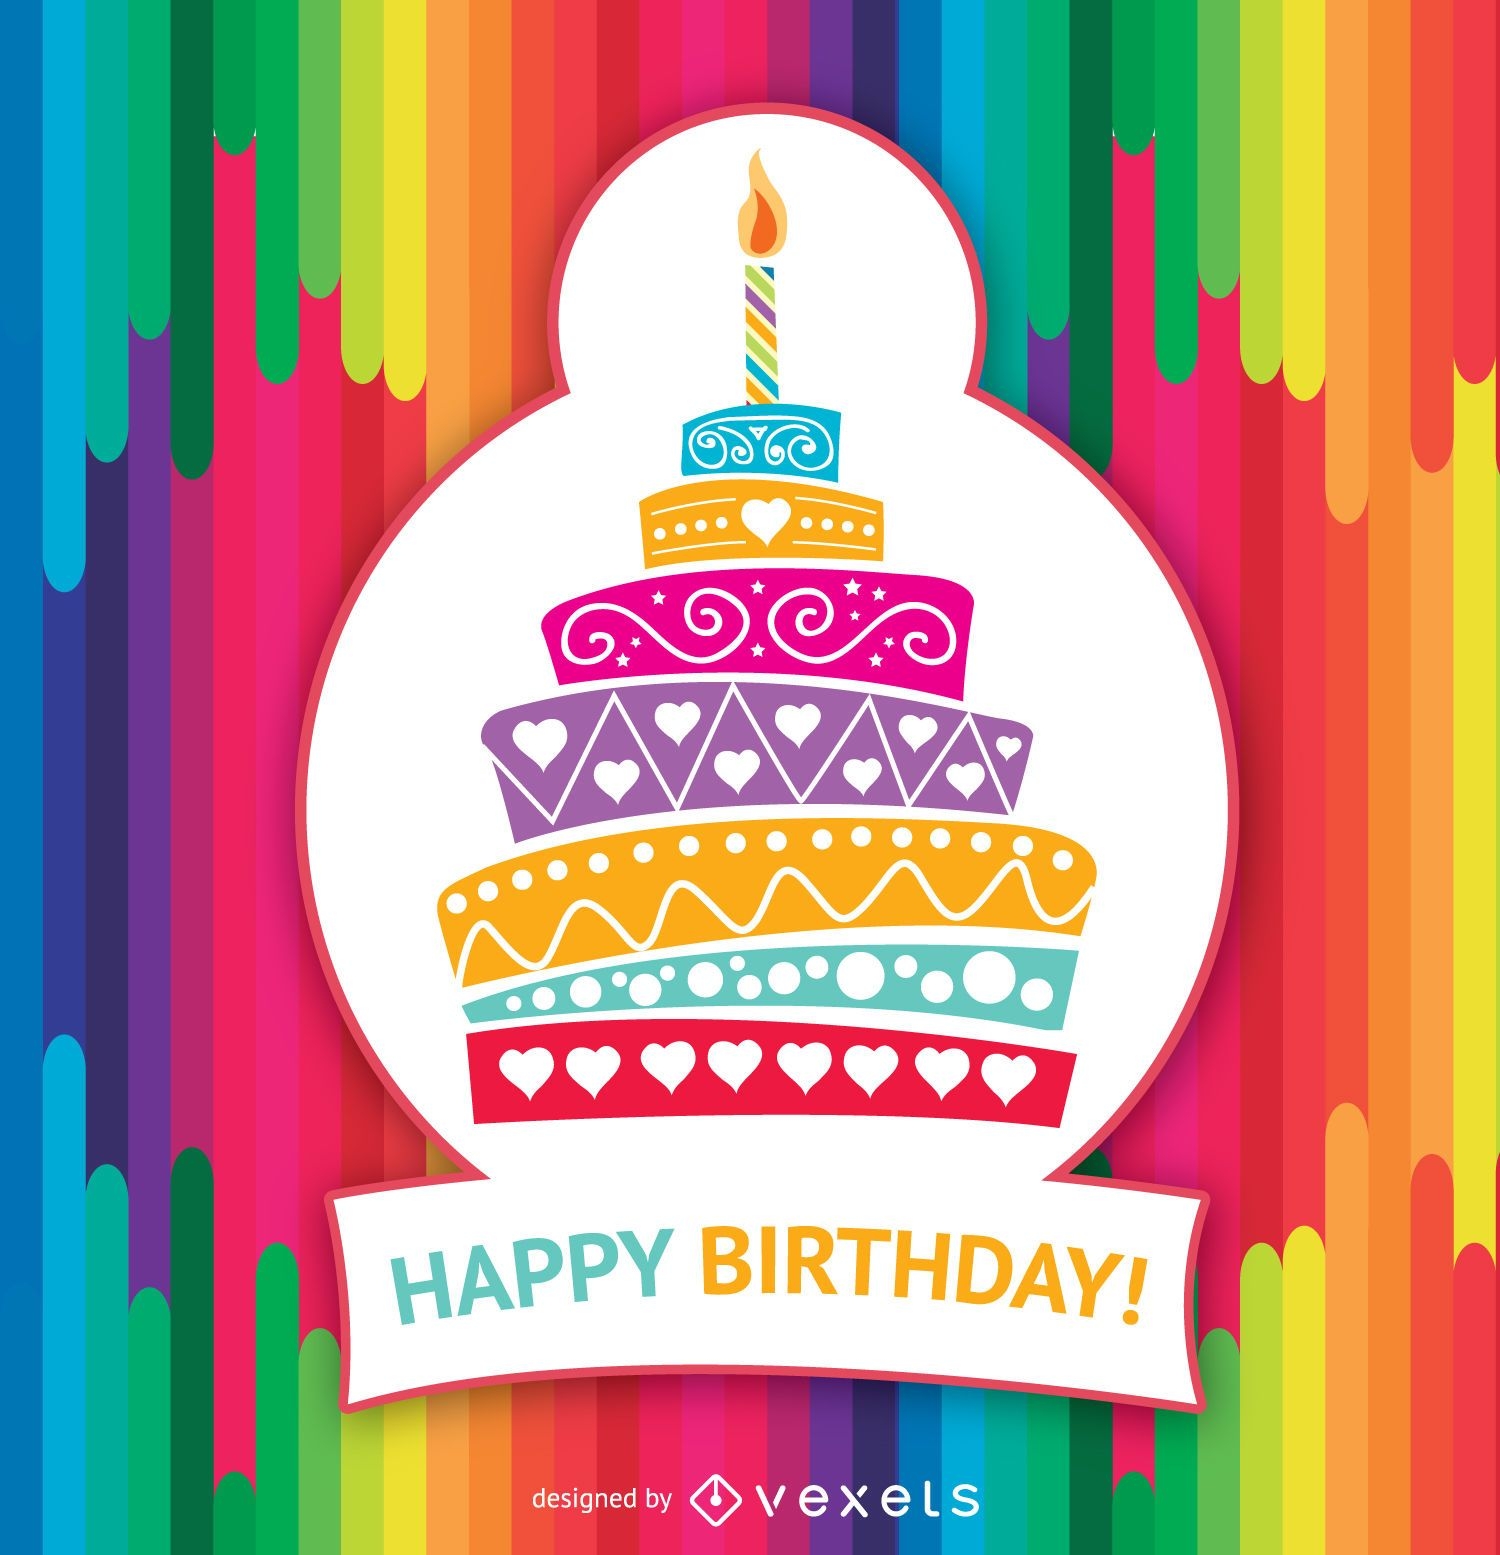 Happy Birthday colorful cake